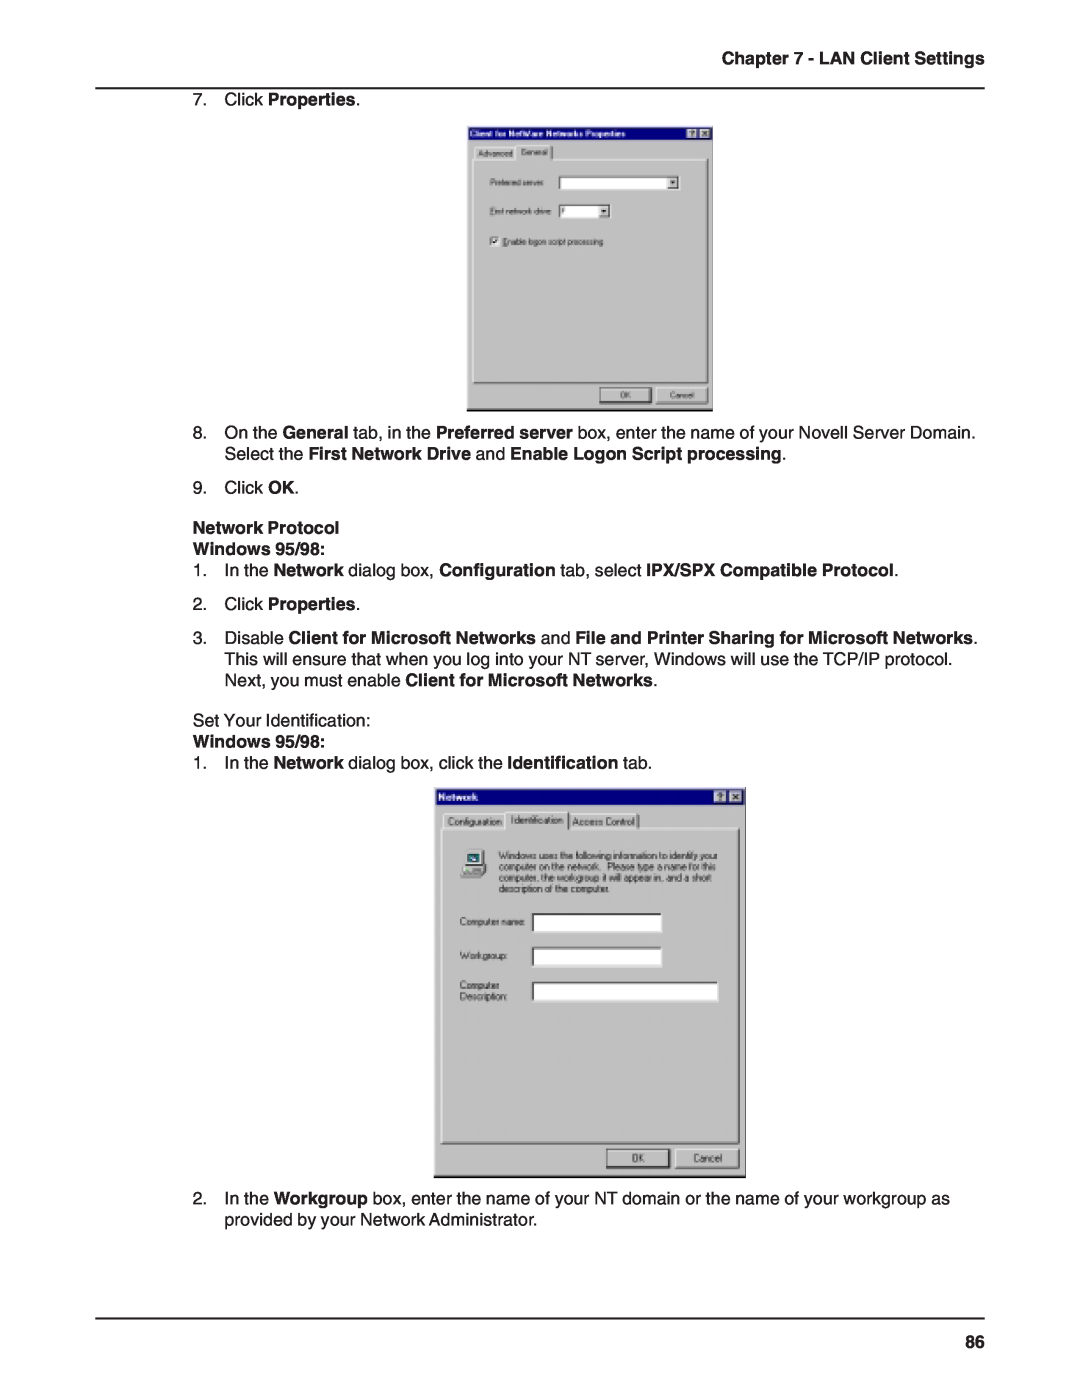 Multi-Tech Systems RF802EW manual Network Protocol Windows 95/98, LAN Client Settings 7. Click Properties 